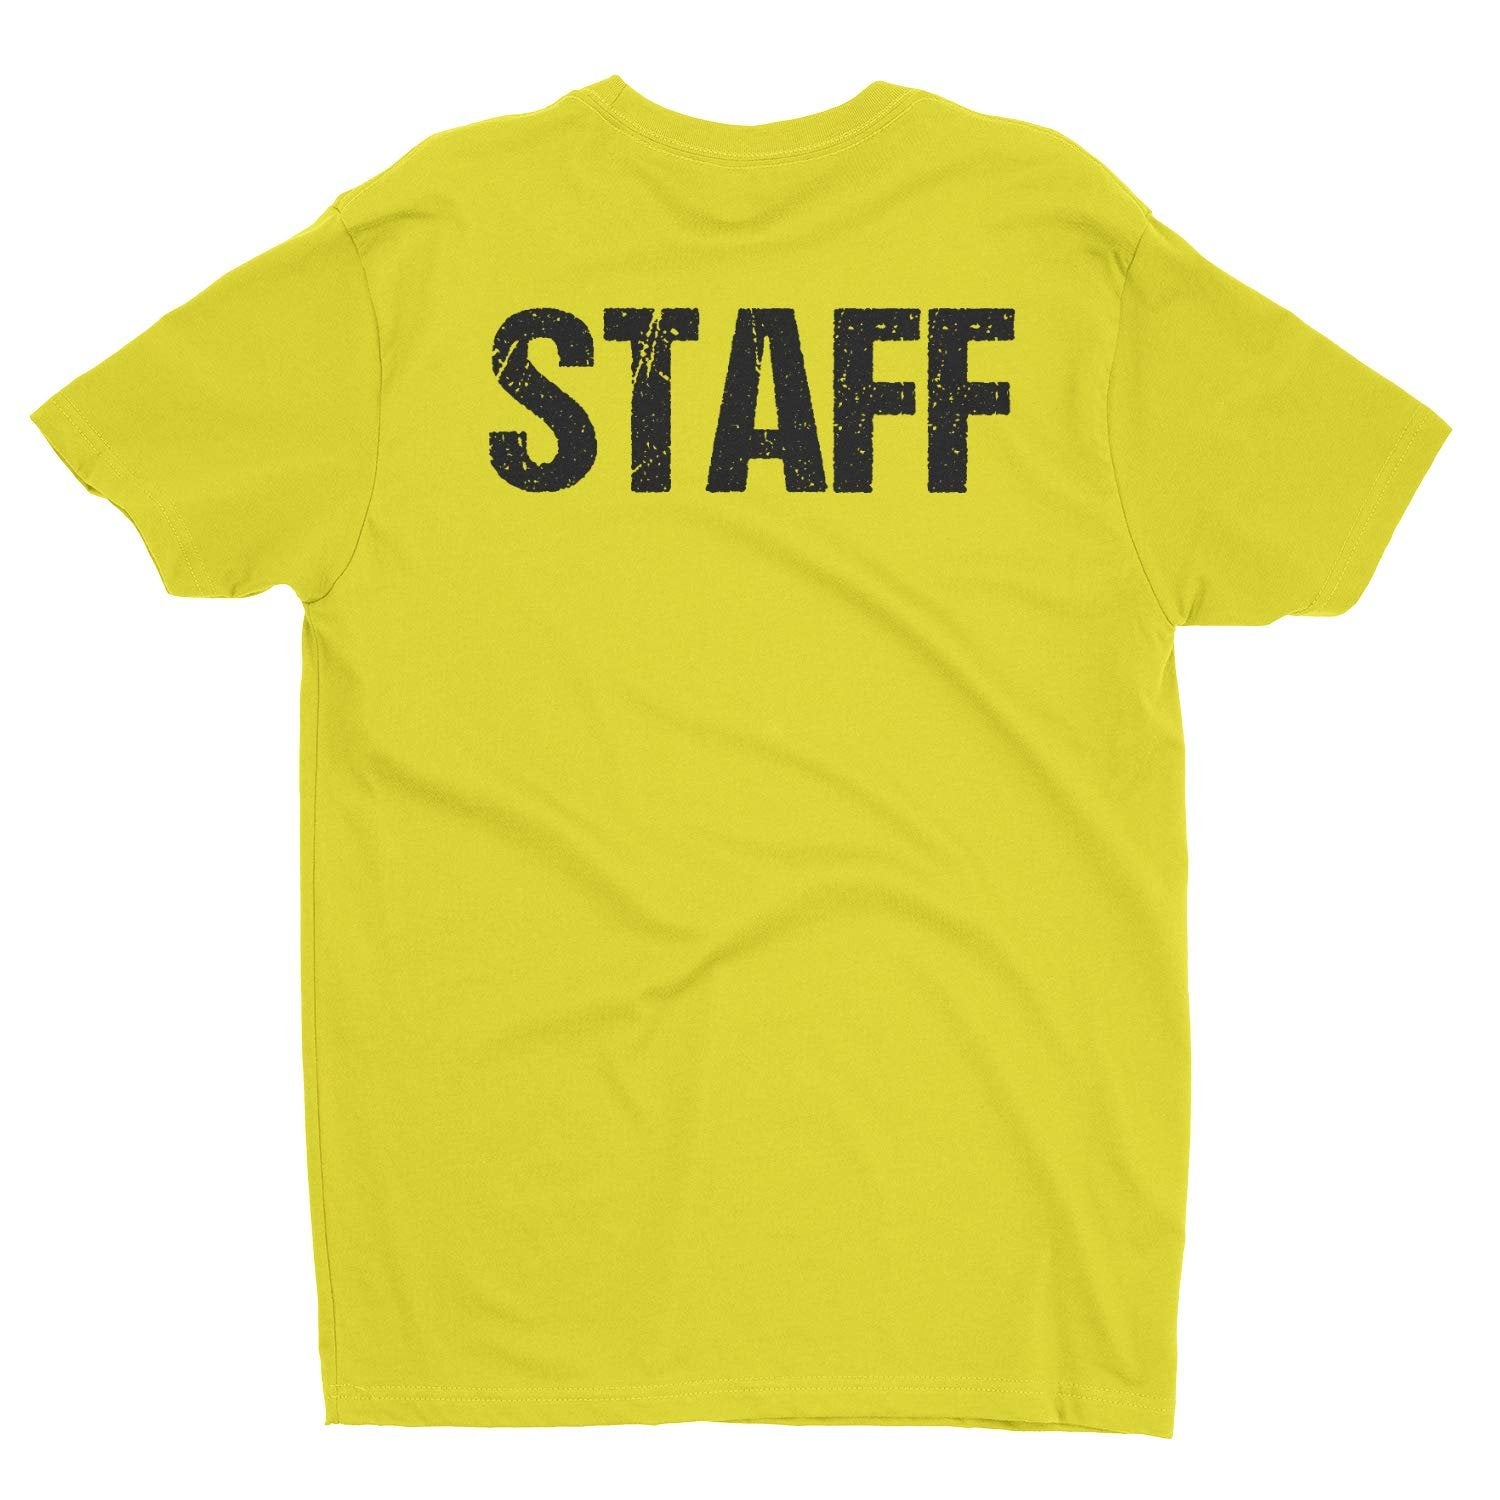 Staff Men's Short Sleeve T-Shirt (Distressed Design, Bright Yellow)